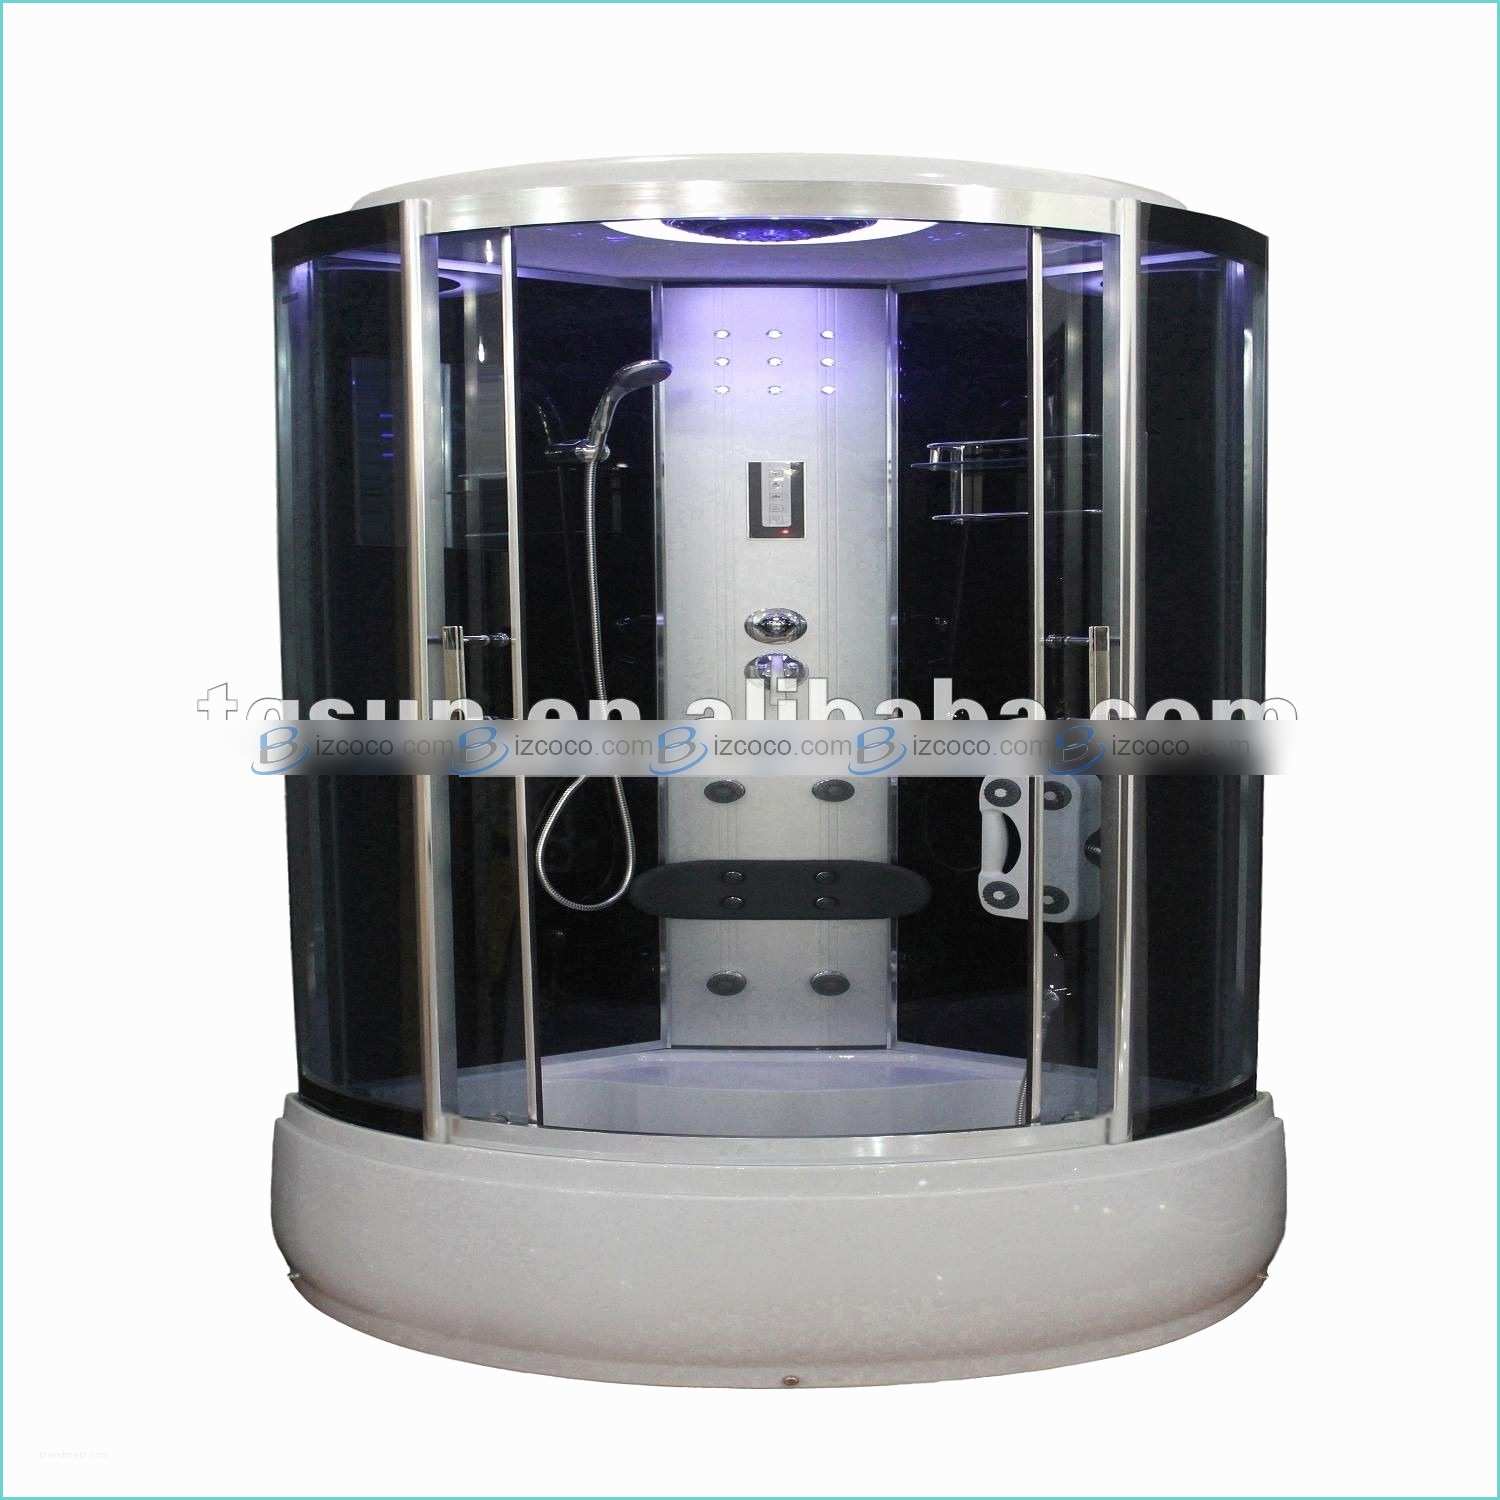 China Acrtlic Douche Steam Shower Carbin with Bathtub Suppliers Luxury Steam Shower Bathtub Bo for Sale Prices